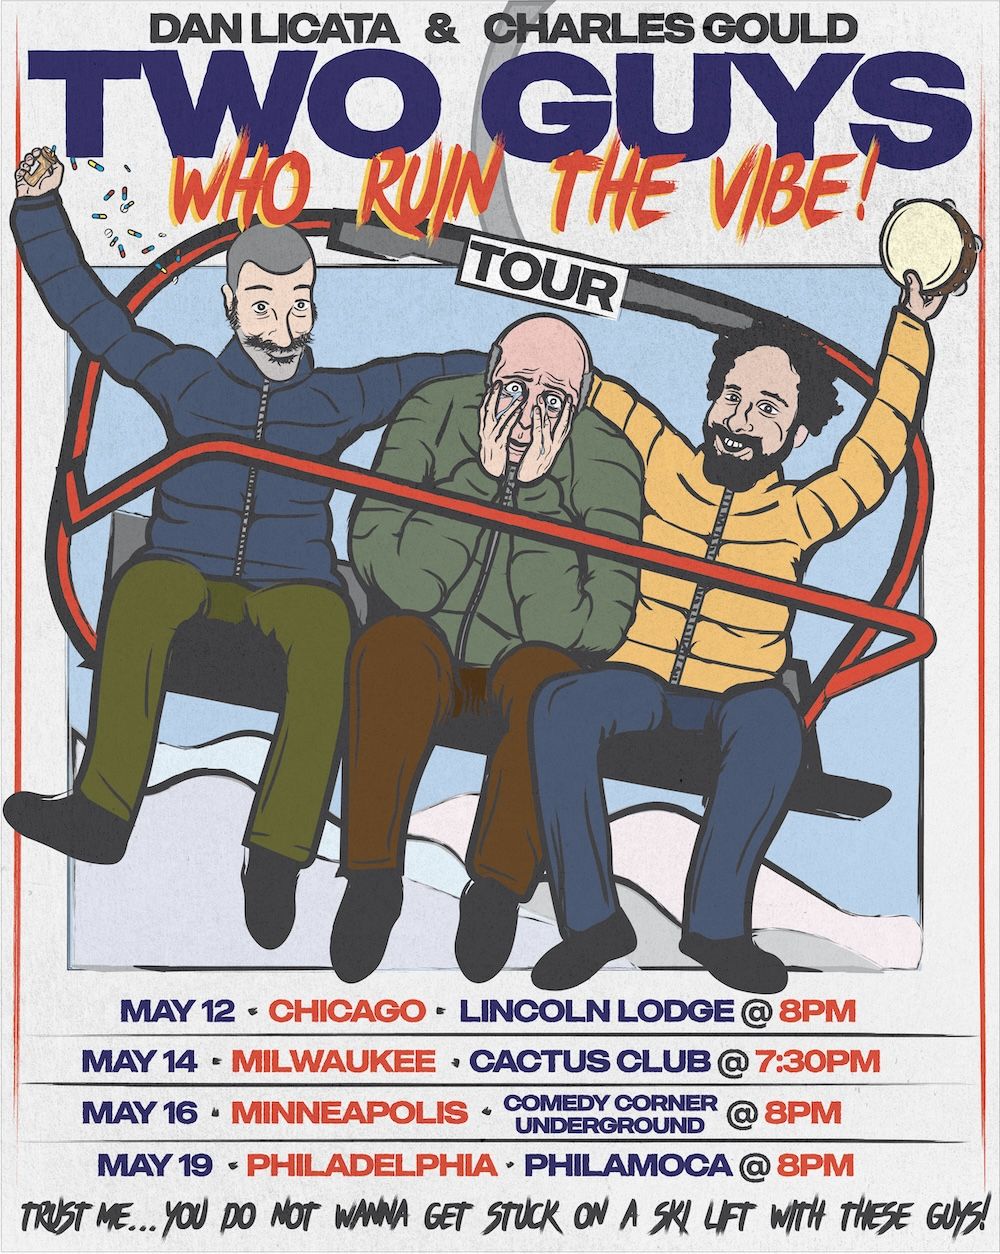 Postponed to August 15! Dan Licata & Charles Gould "Two Guys Who Ruin The Vibe!" Tour at PhilaMOCA